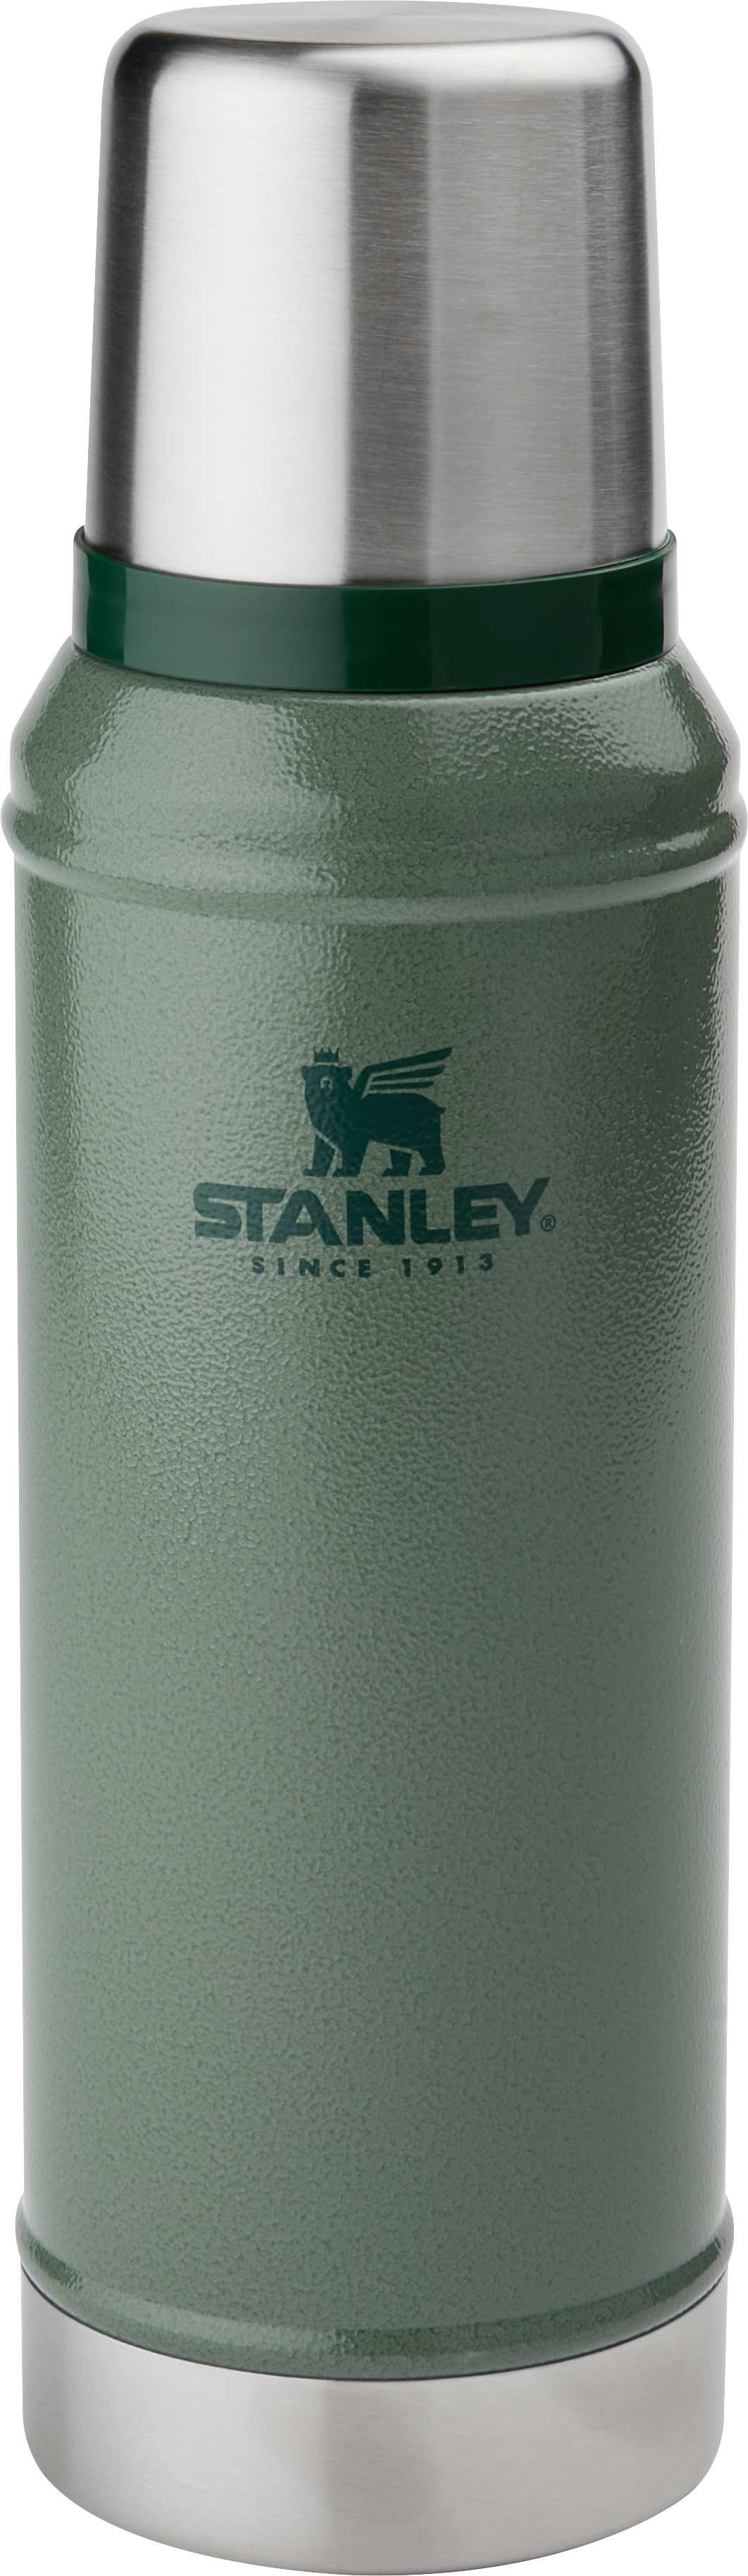 Stanley Adventure thermos green